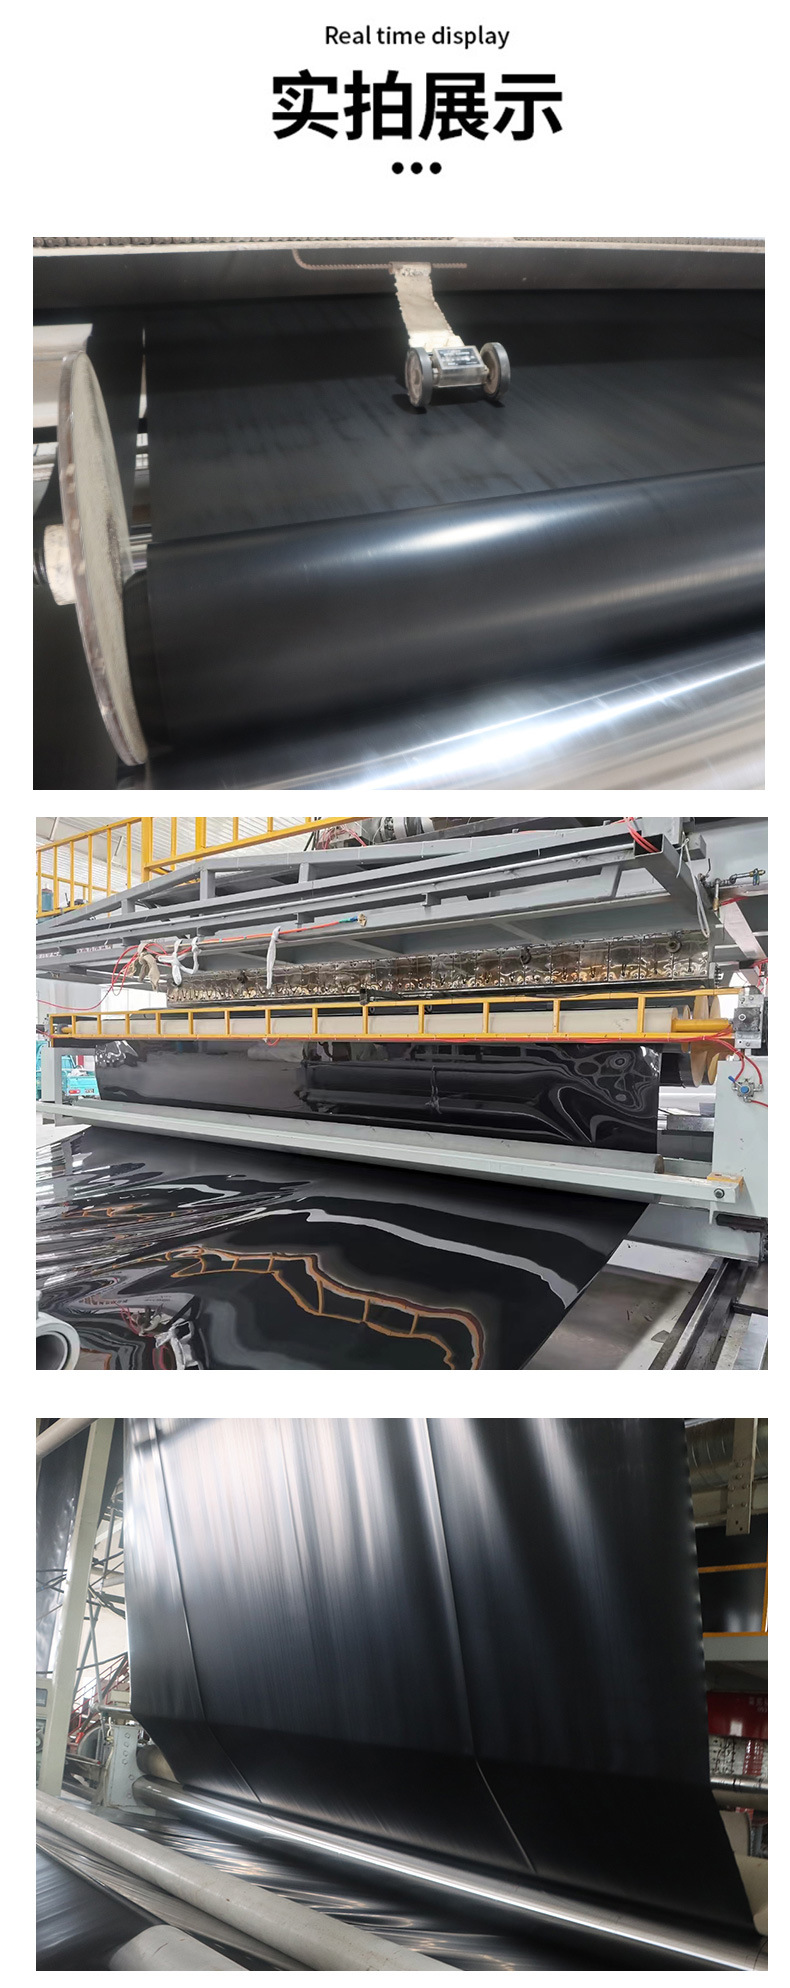 Lingjian Tailings Dam HDPE Geomembrane 1.3mm UV resistant outsourcing construction 700%